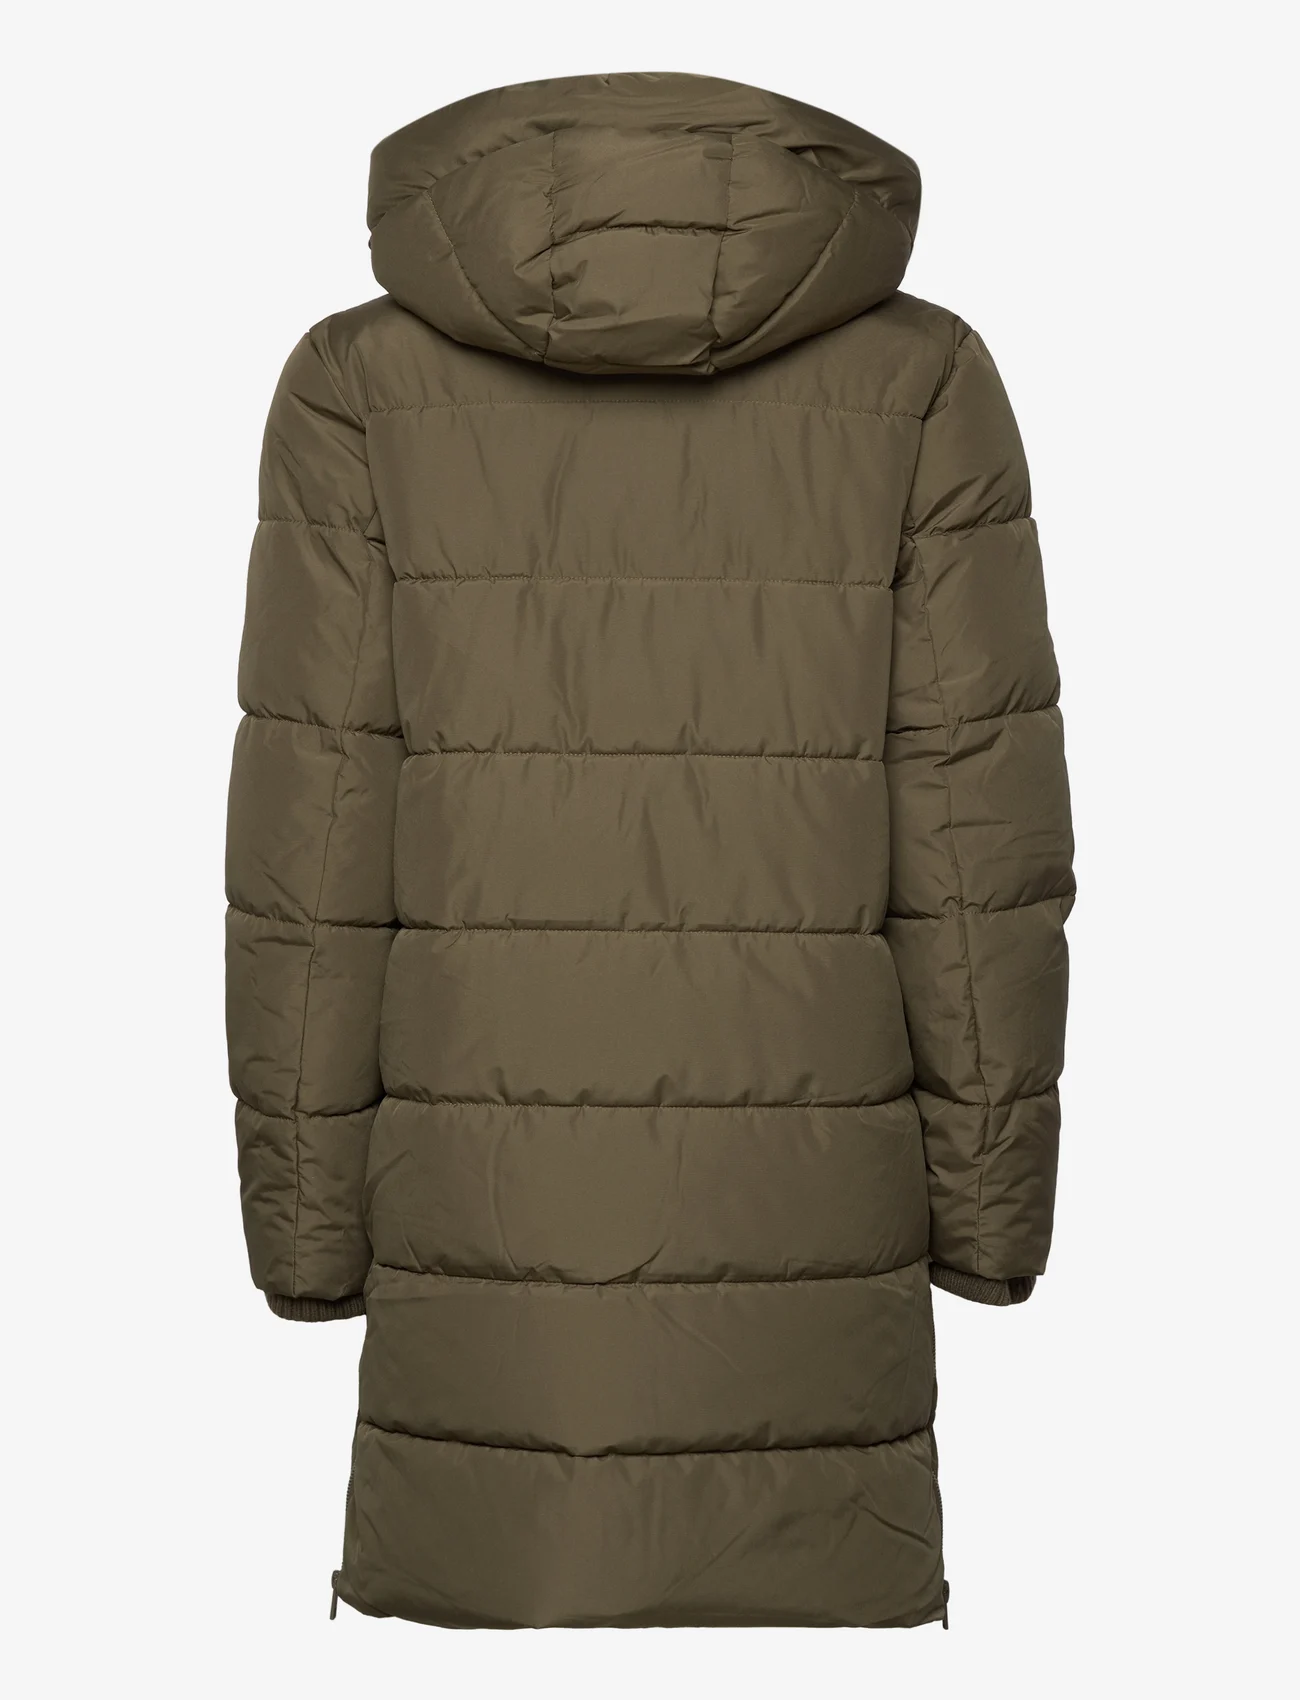 Esprit Casual - Quilted coat with rib knit details - vinterjackor - dark khaki - 1